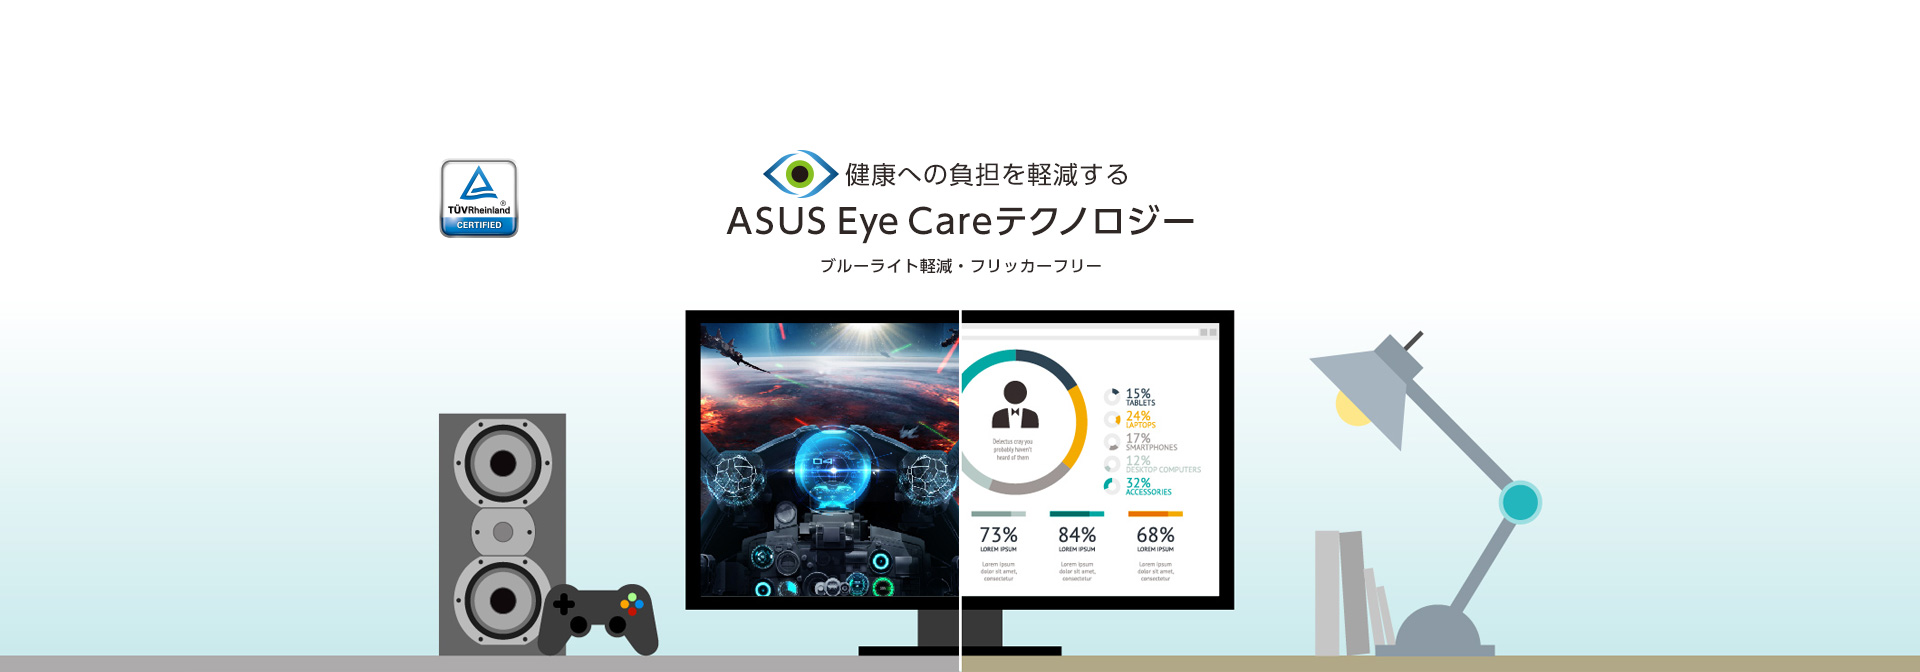 ASUS Eye Care Monitors